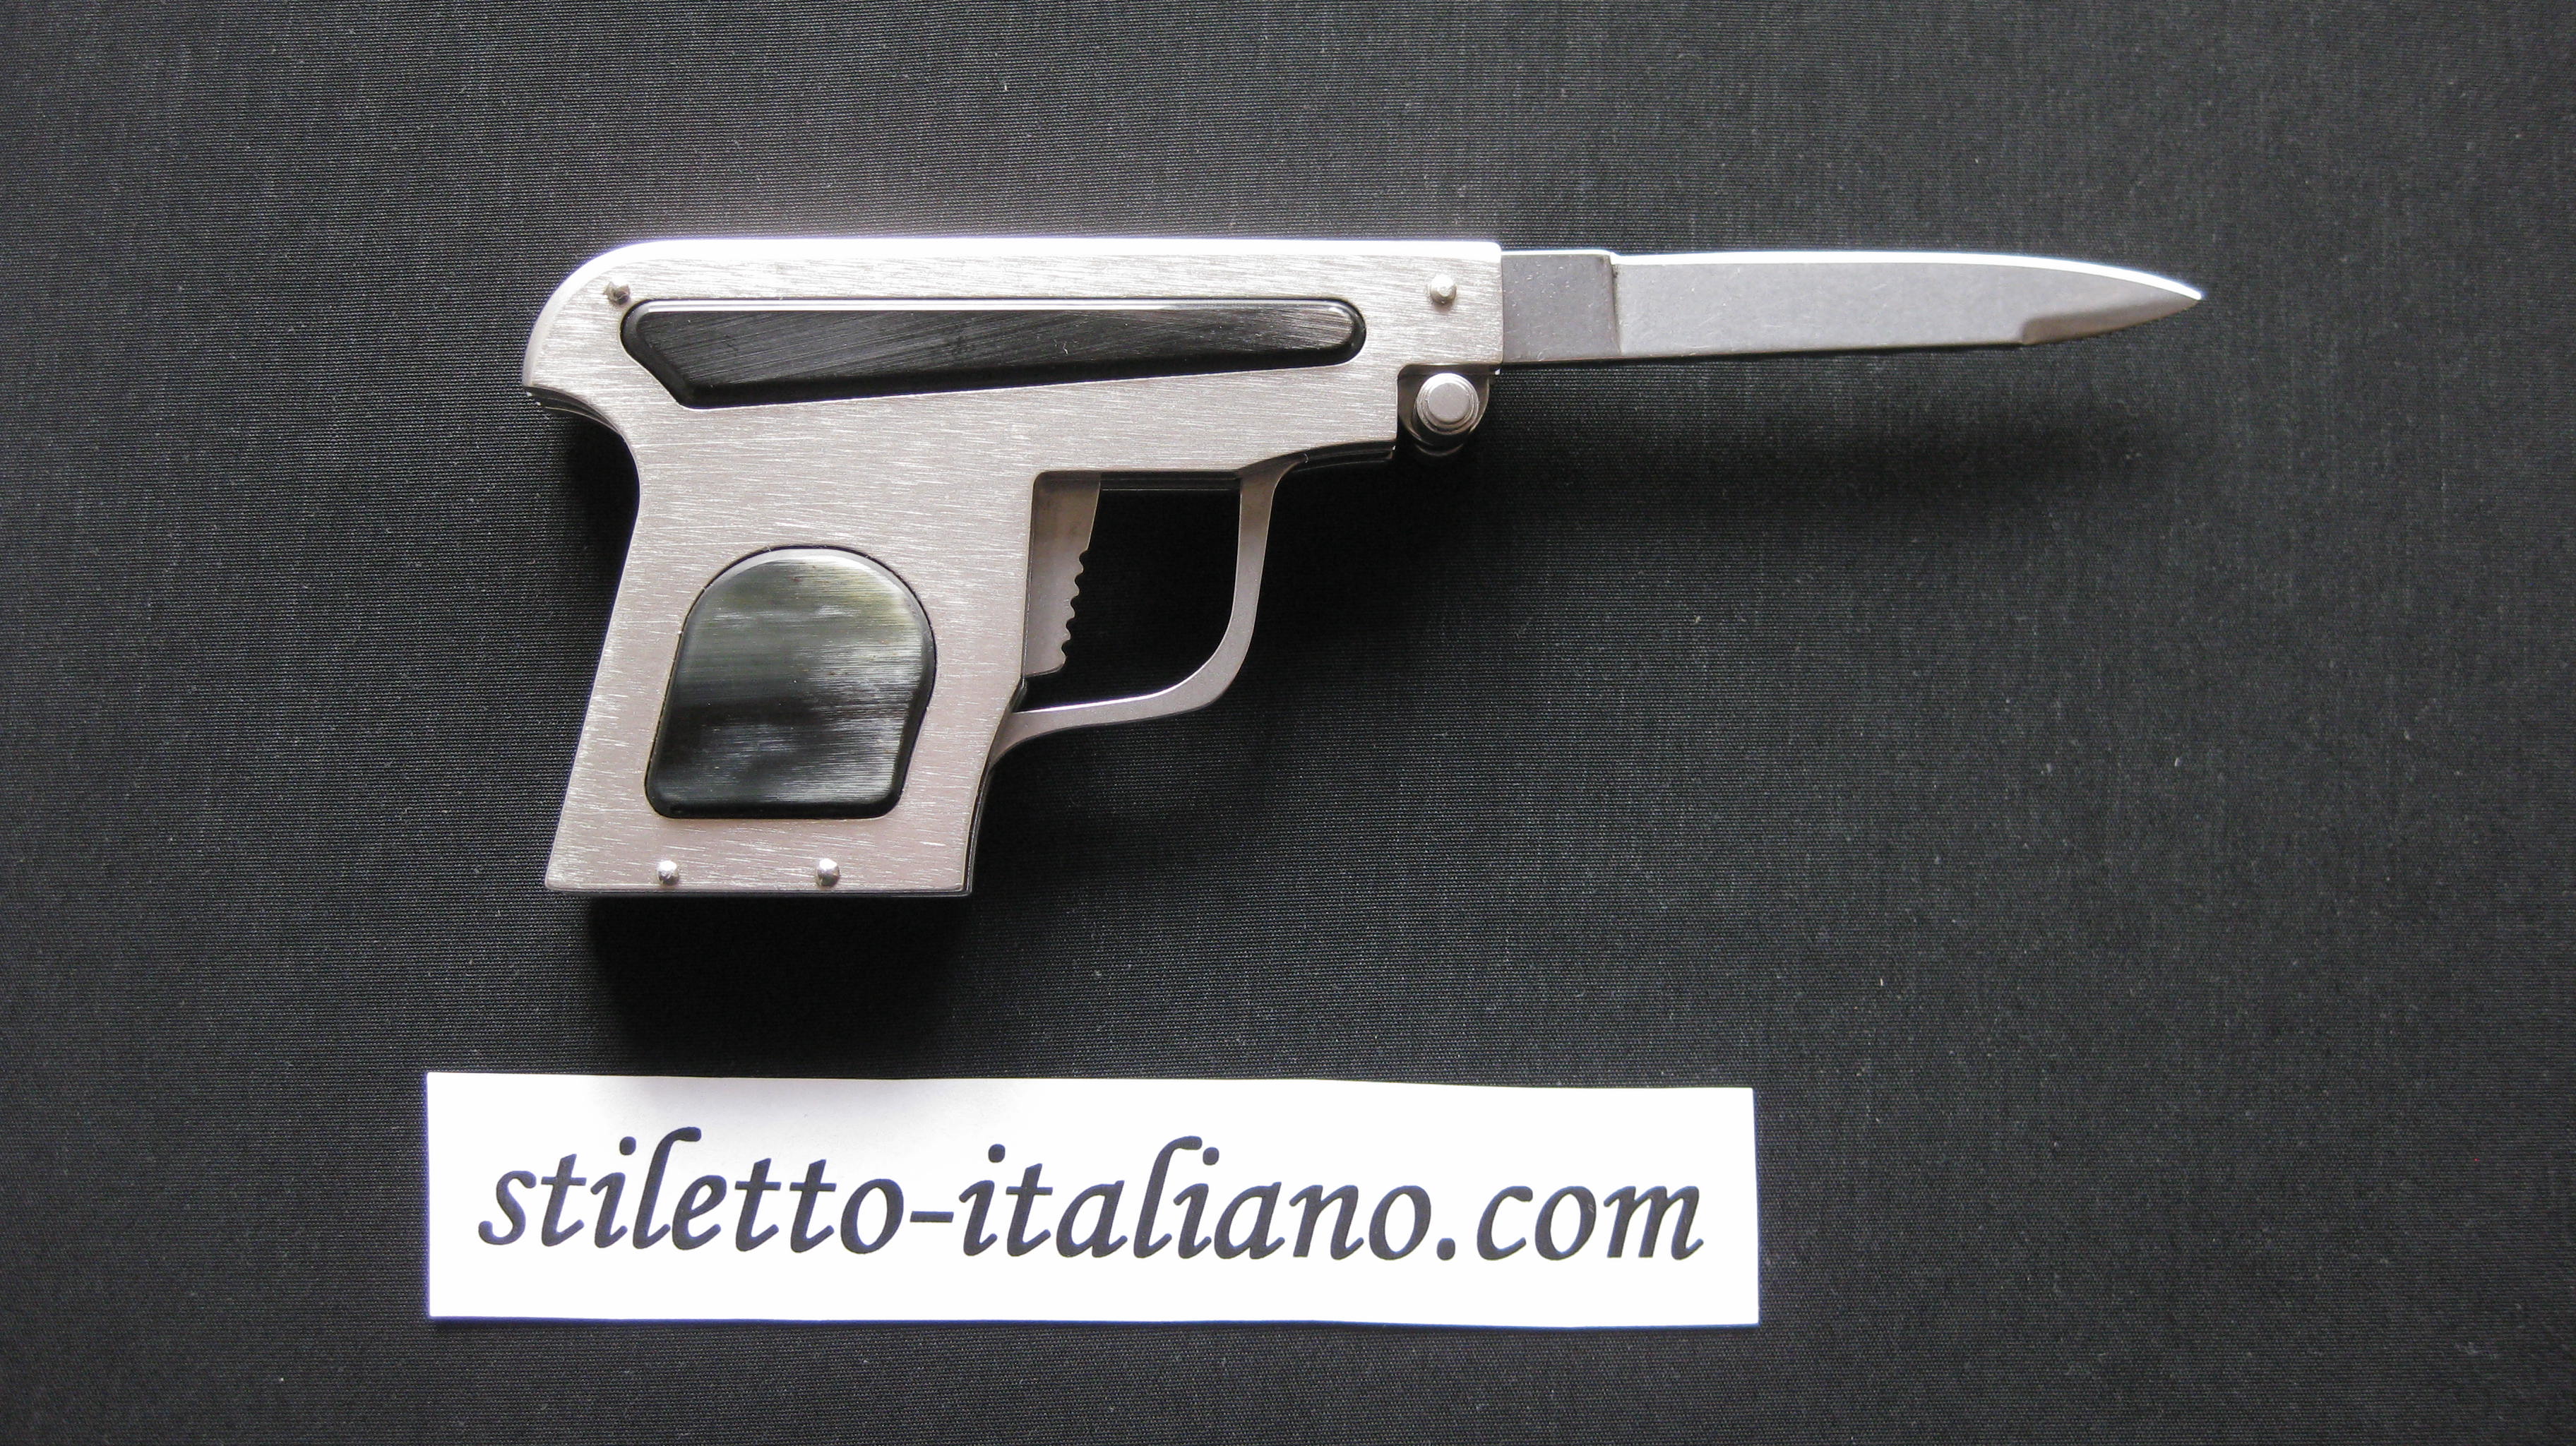 2,87 Letter Opener Gun-knife by AGA Campolin